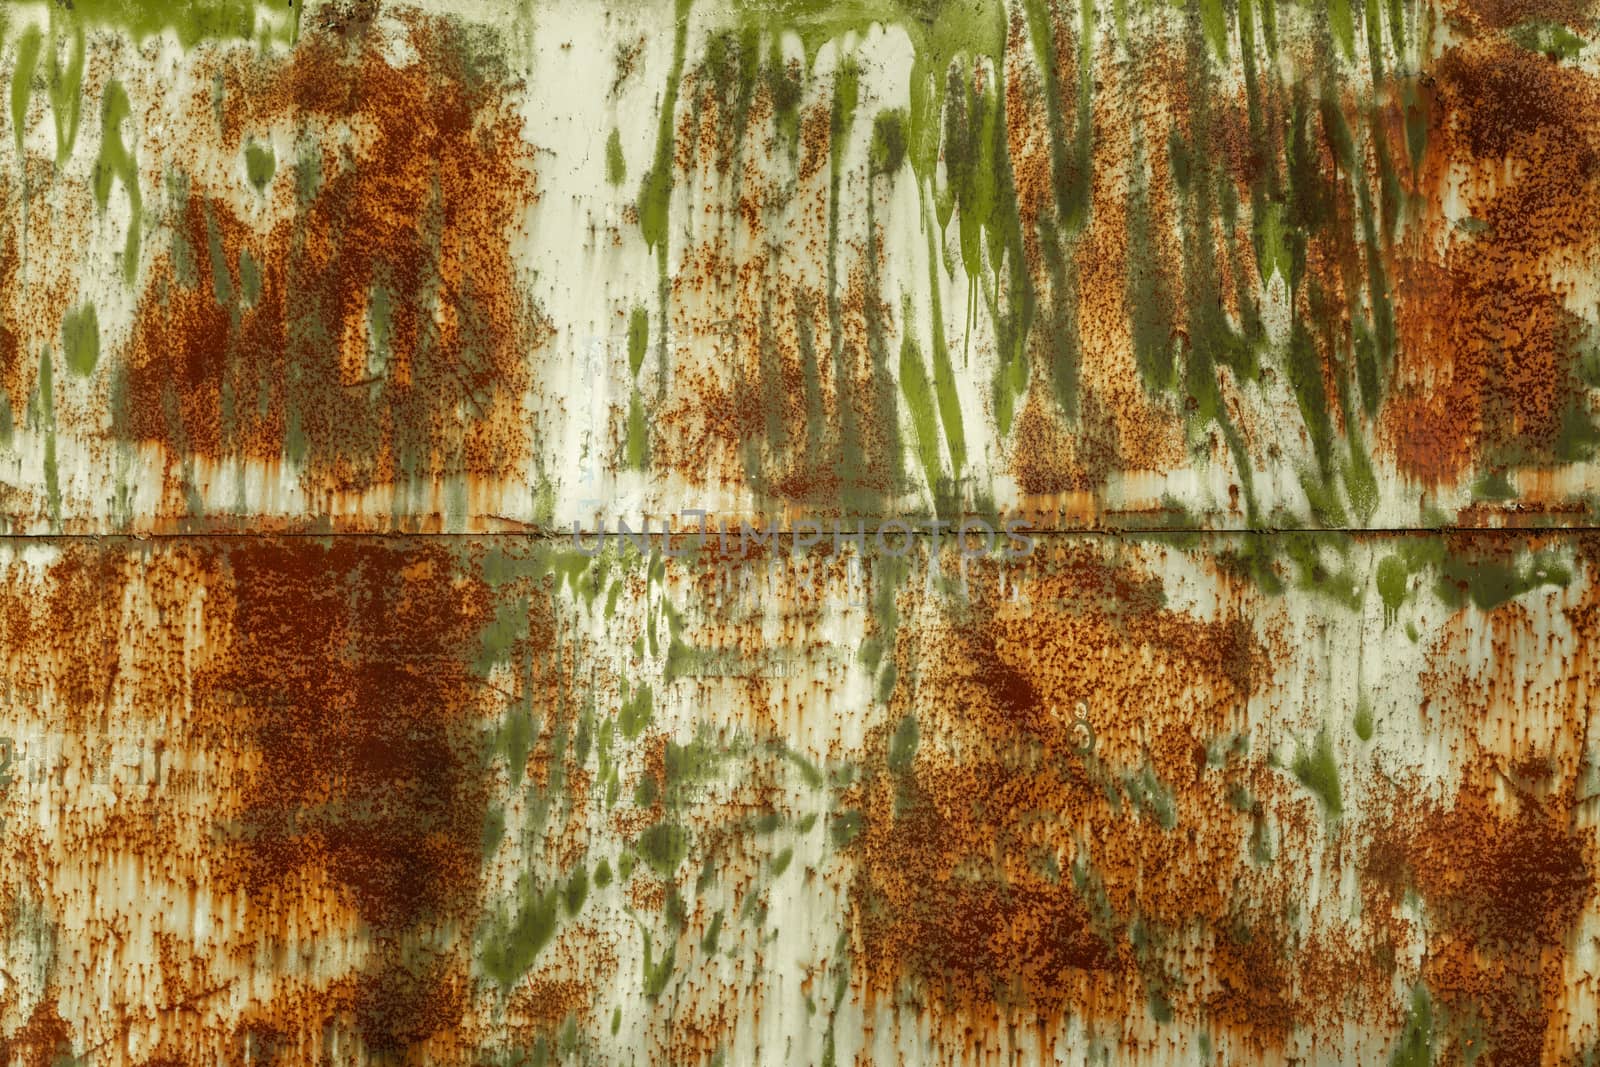 Rusty metal texture as background closeup